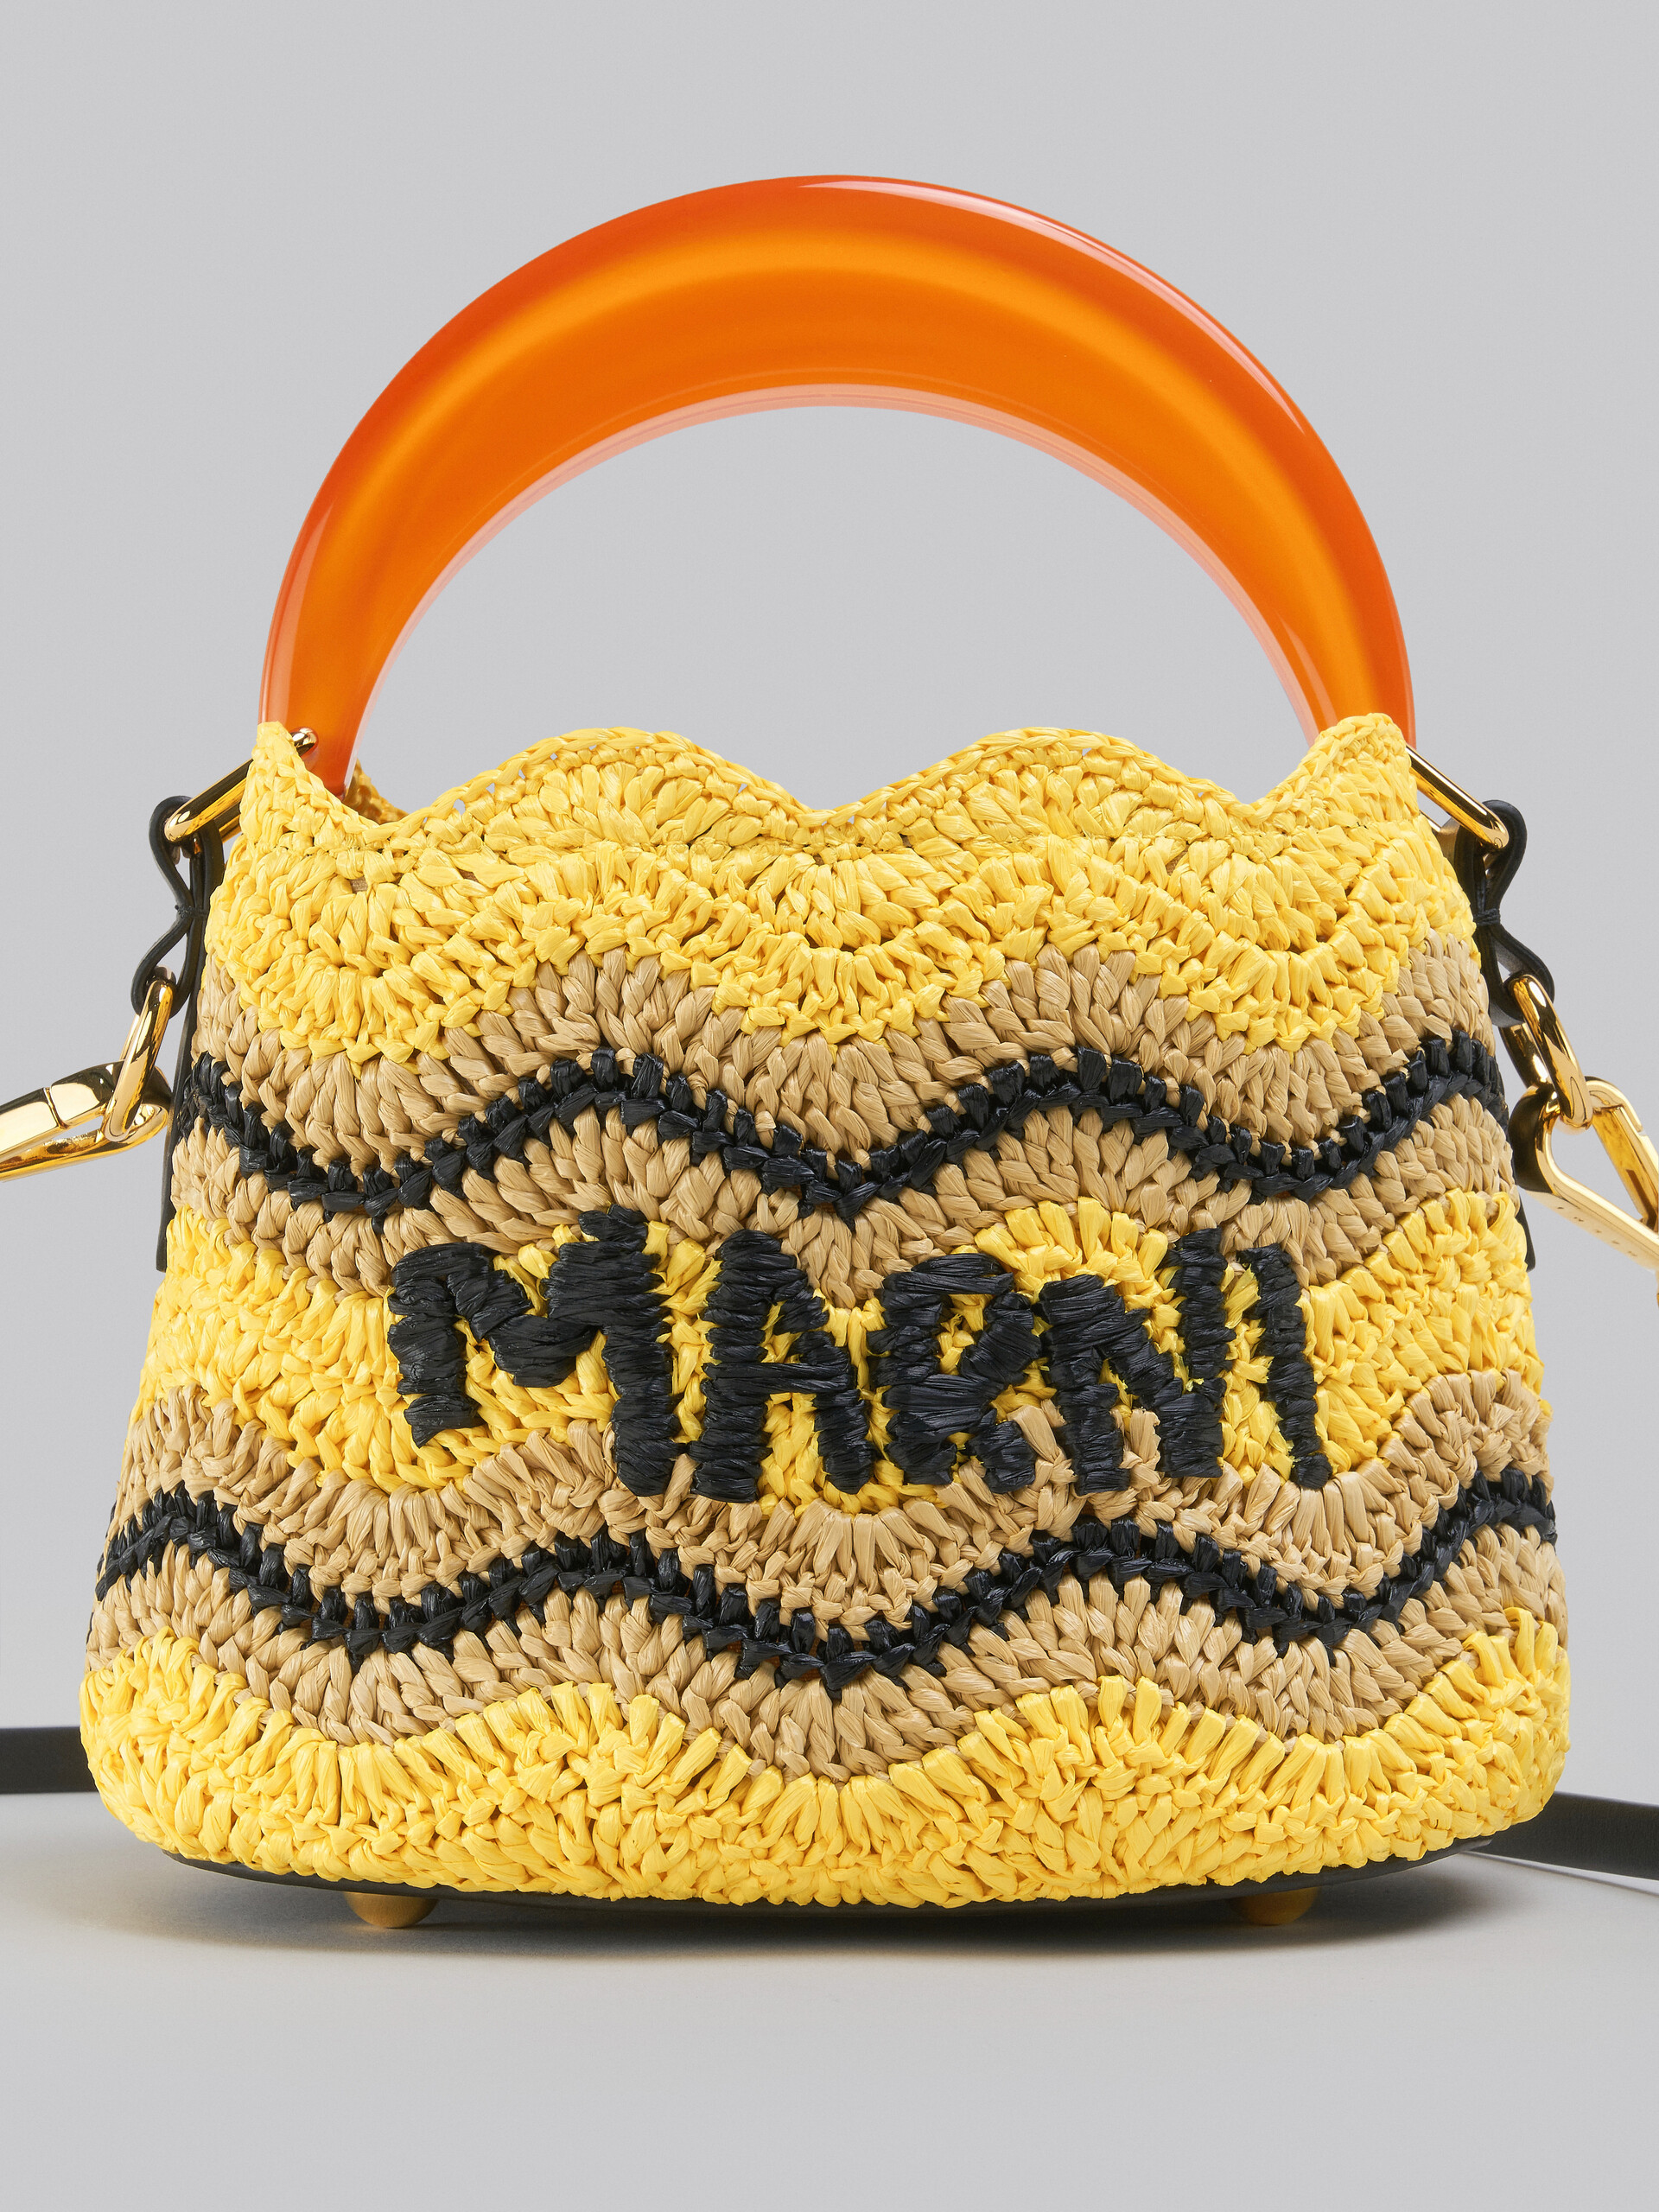 Marni x No Vacancy Inn - Venice Mini Bucket in yellow crochet raffia - Shoulder Bag - Image 5